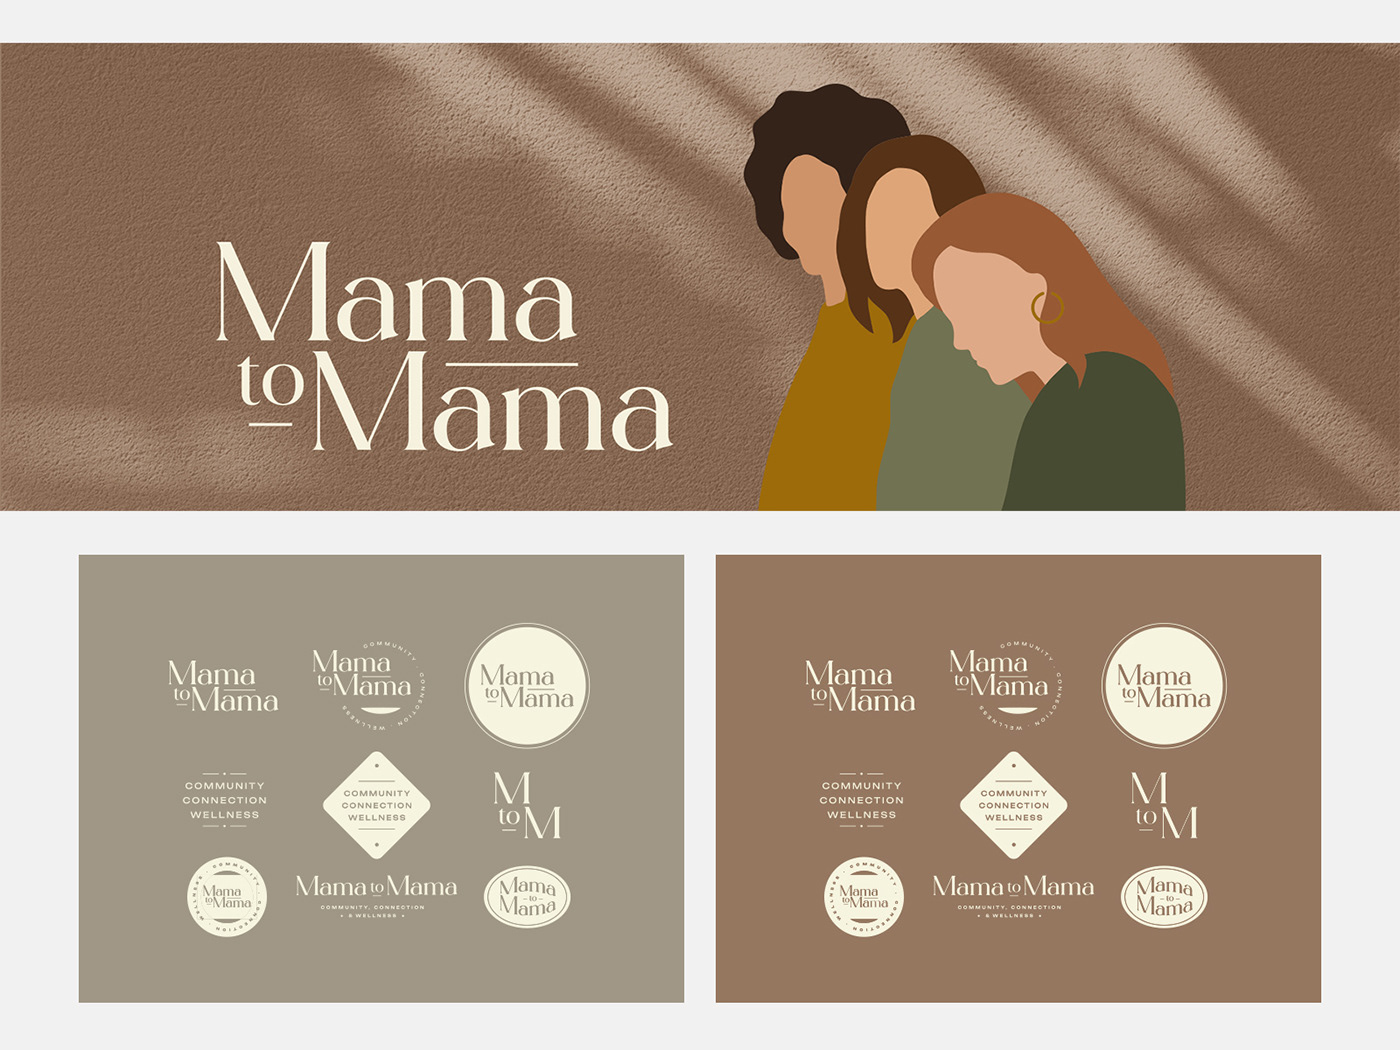 mom community Wellness connection mom logo women help group mama logo